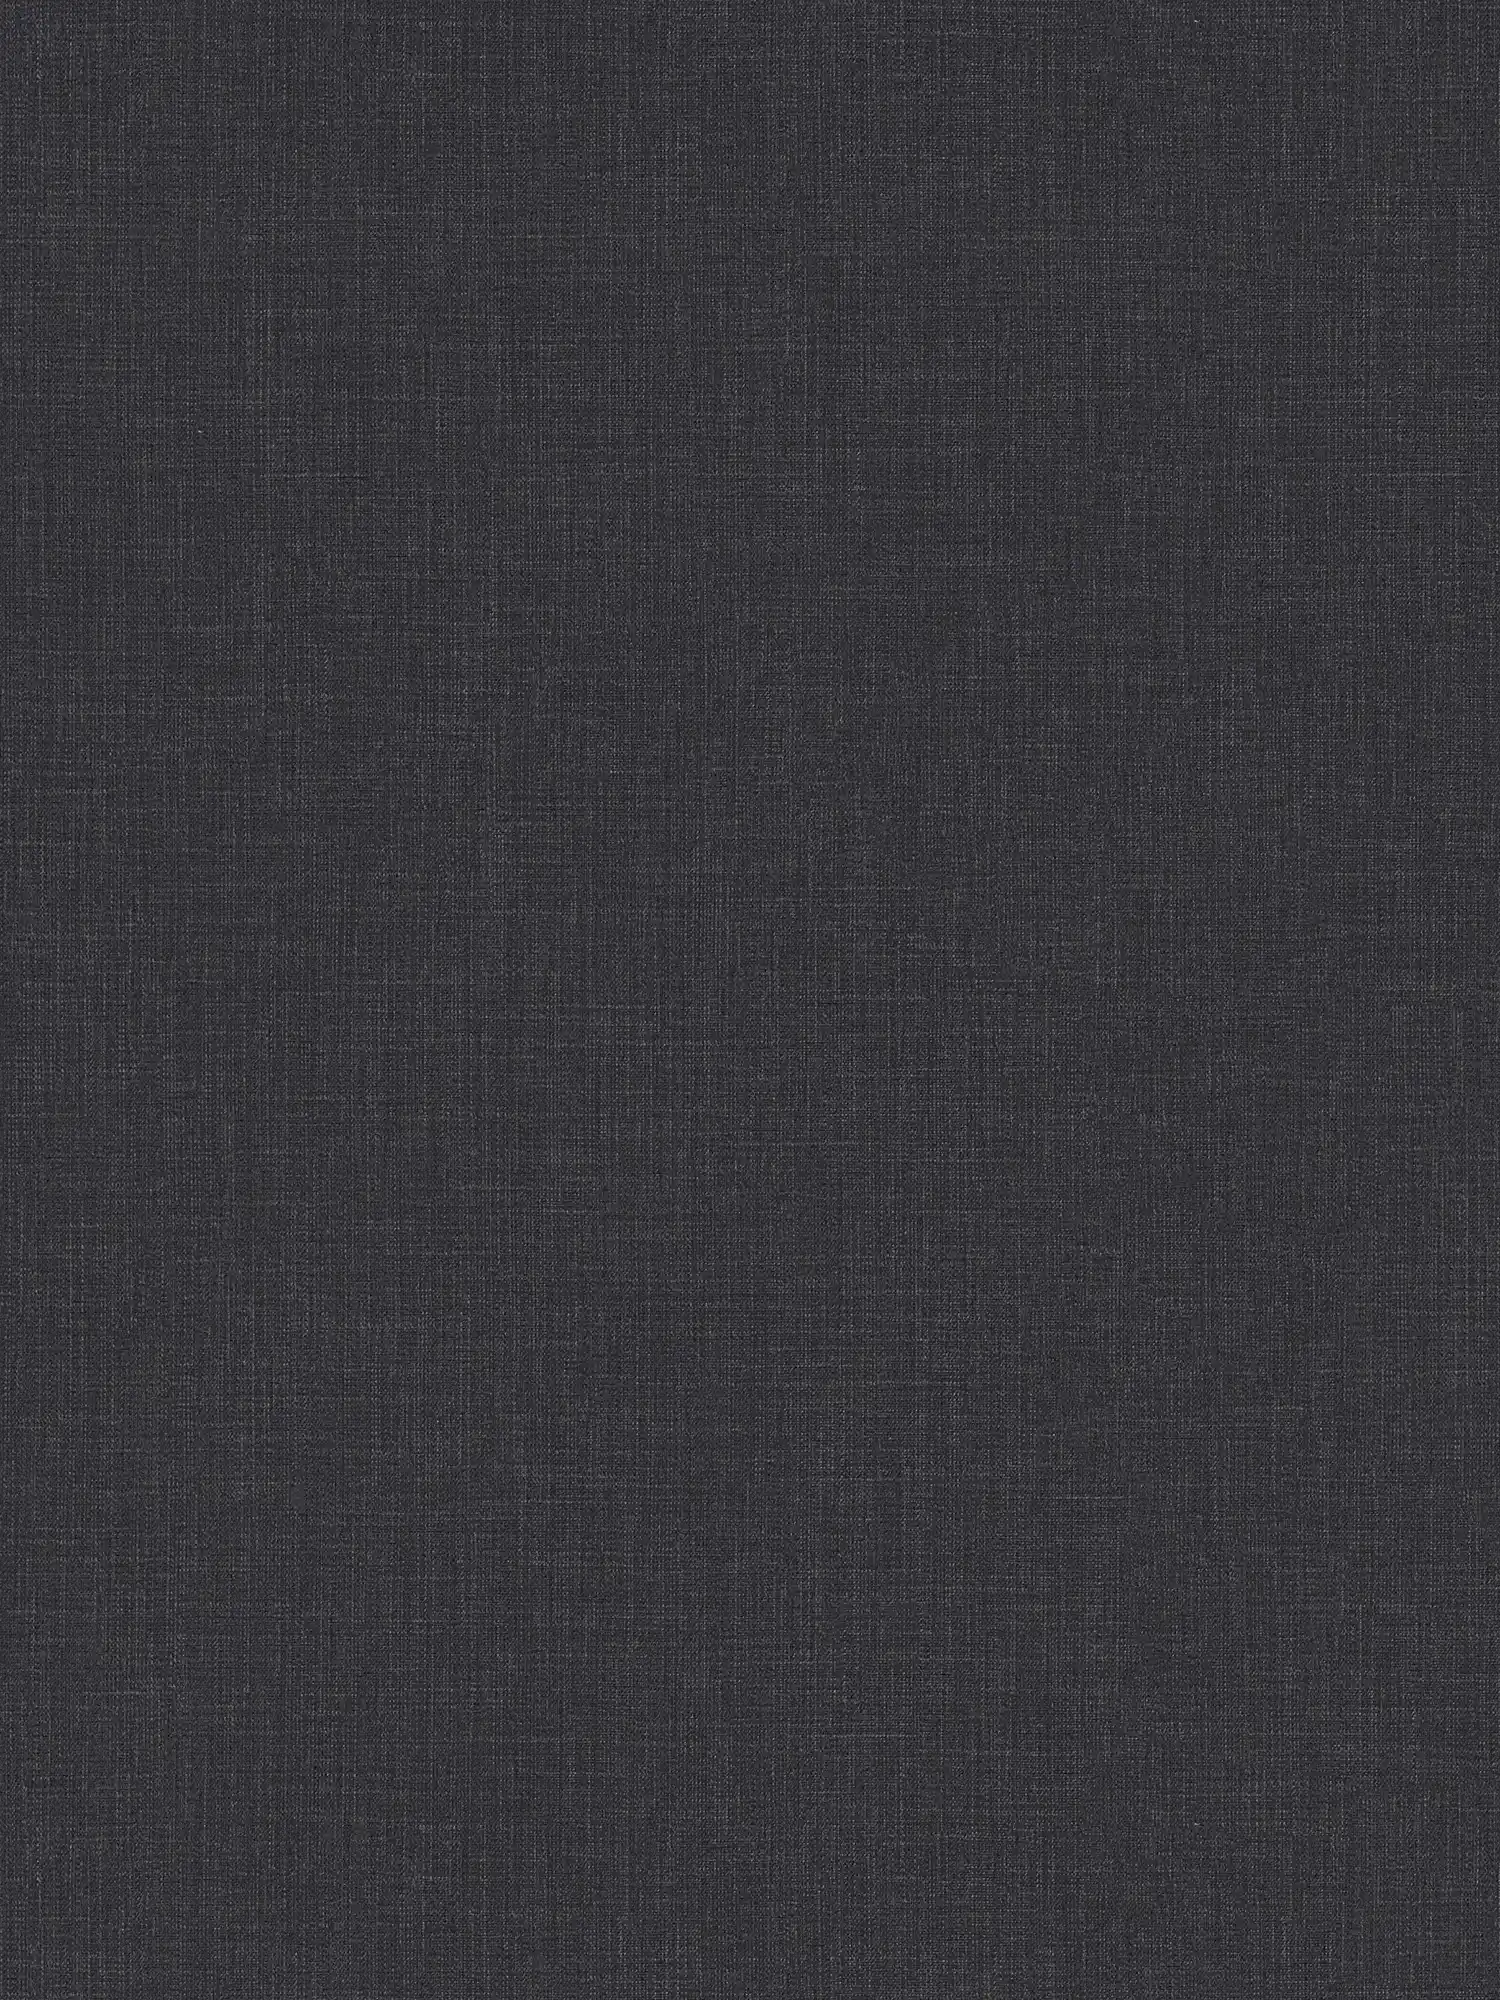 Vliestapete meliert mit Textil-Optik – Blau, Grau, Weiß
